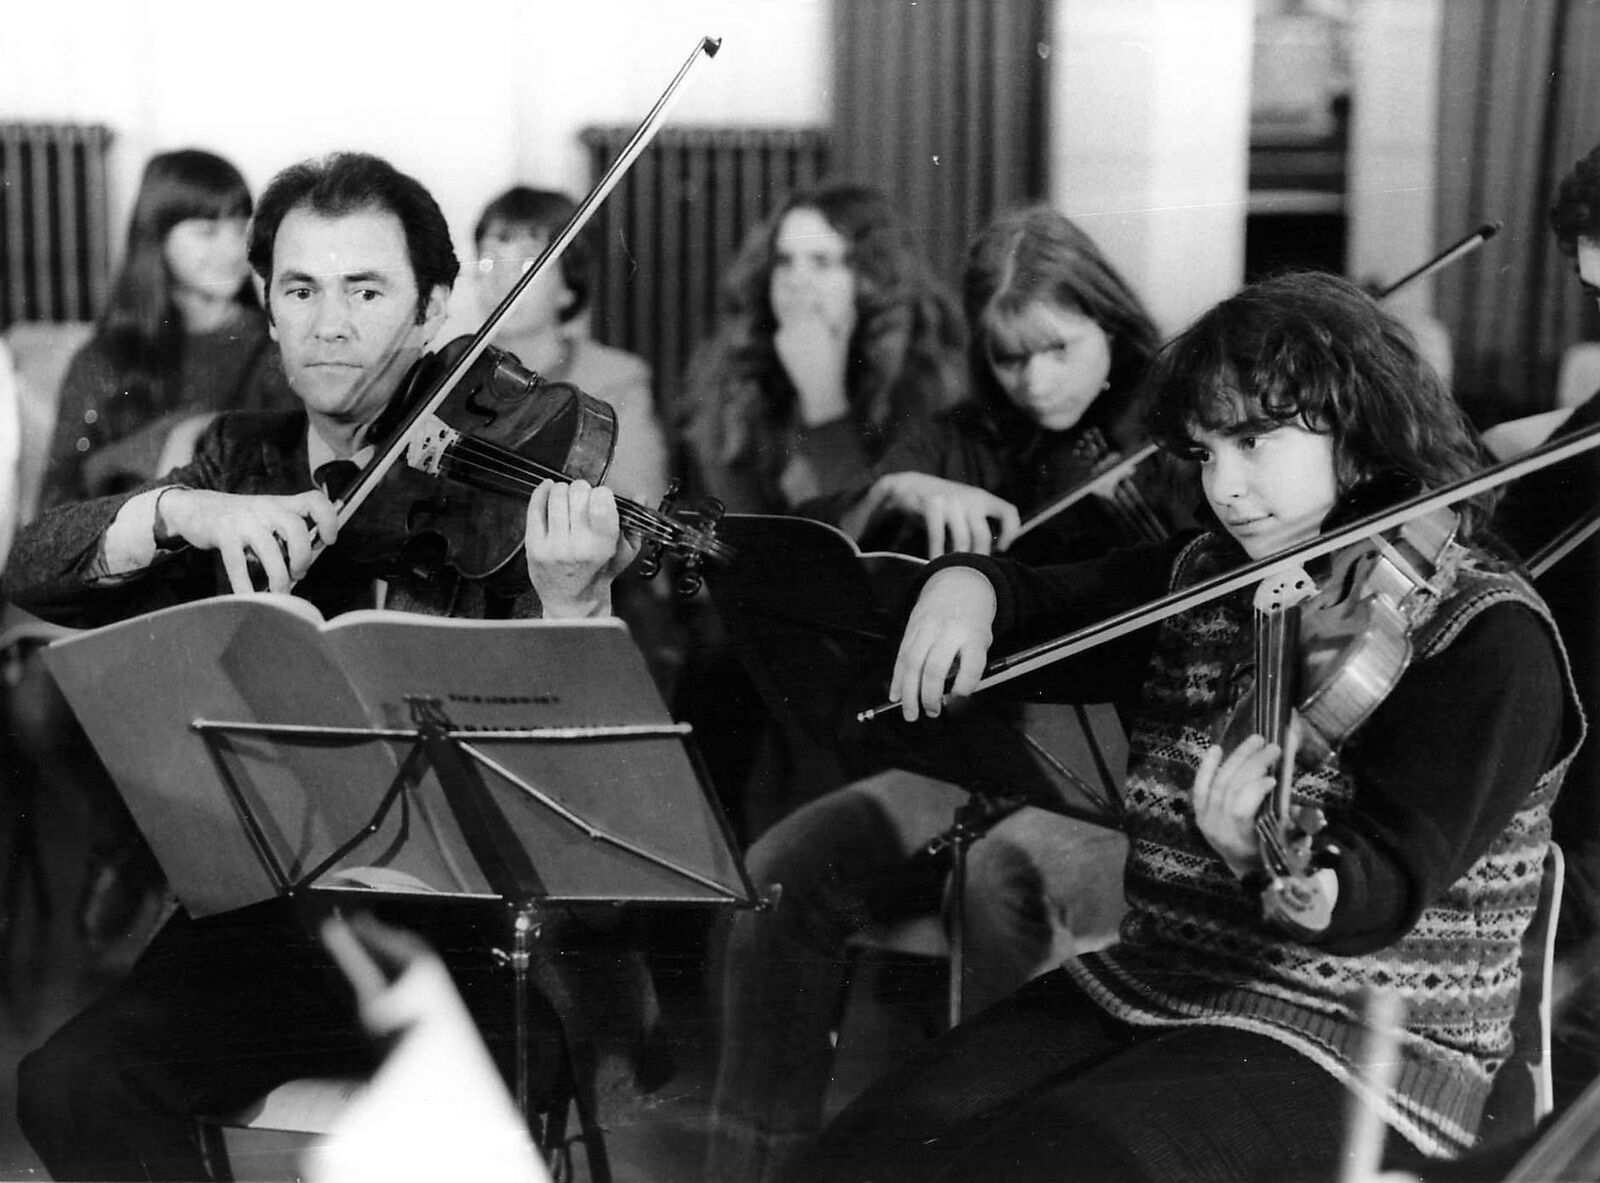 1981 Press Photo London Philharmonic Orchestra Students play Violin violinists